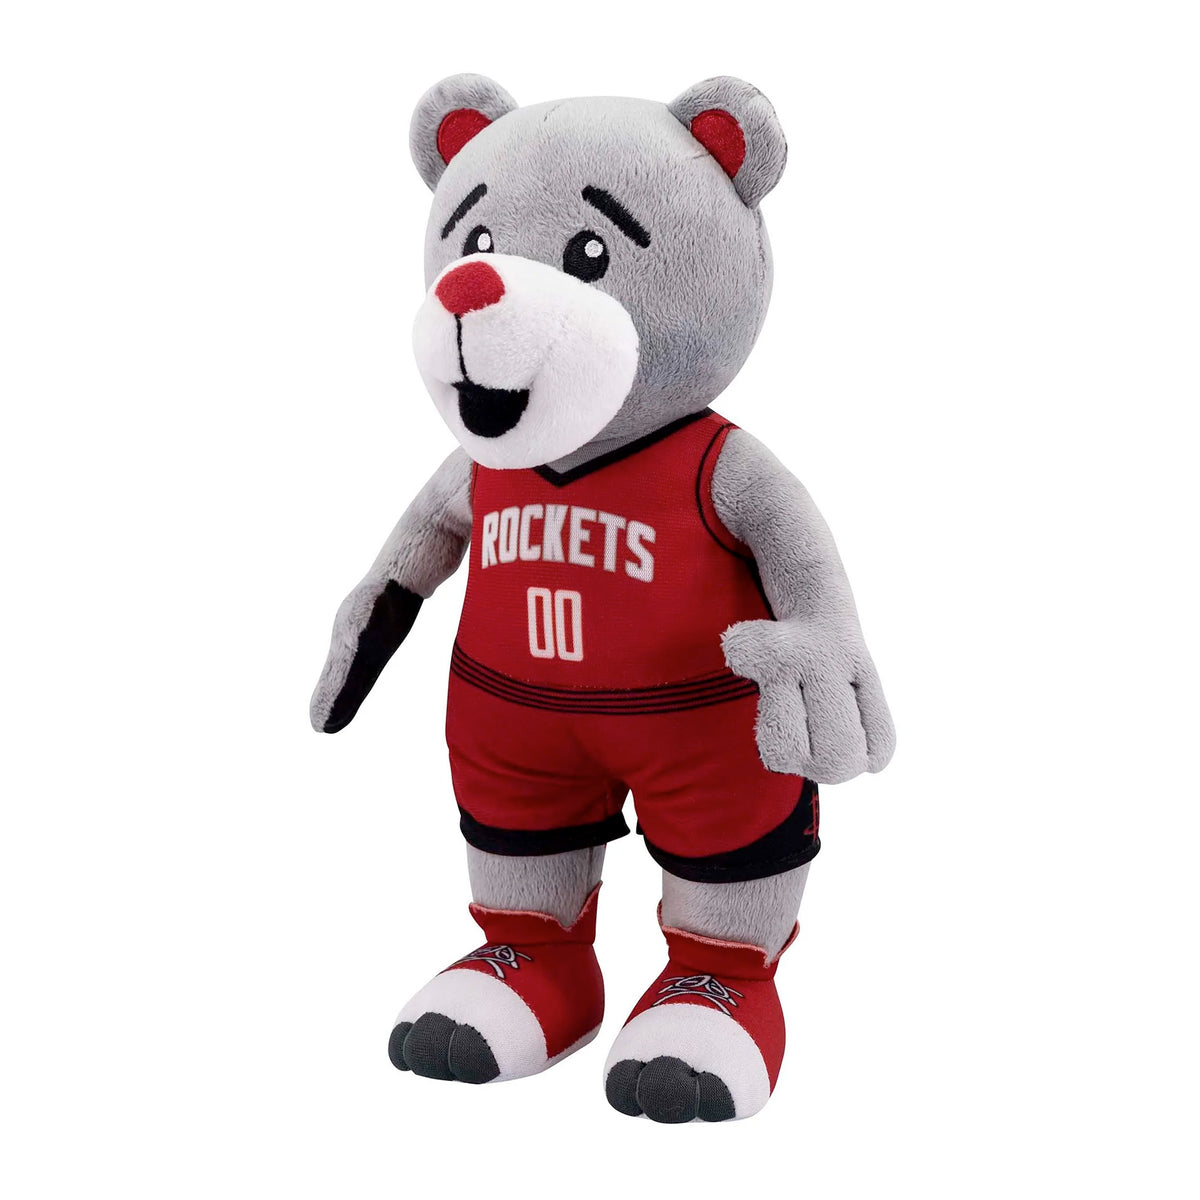 Houston Rockets Clutch Mascot Plush Toy